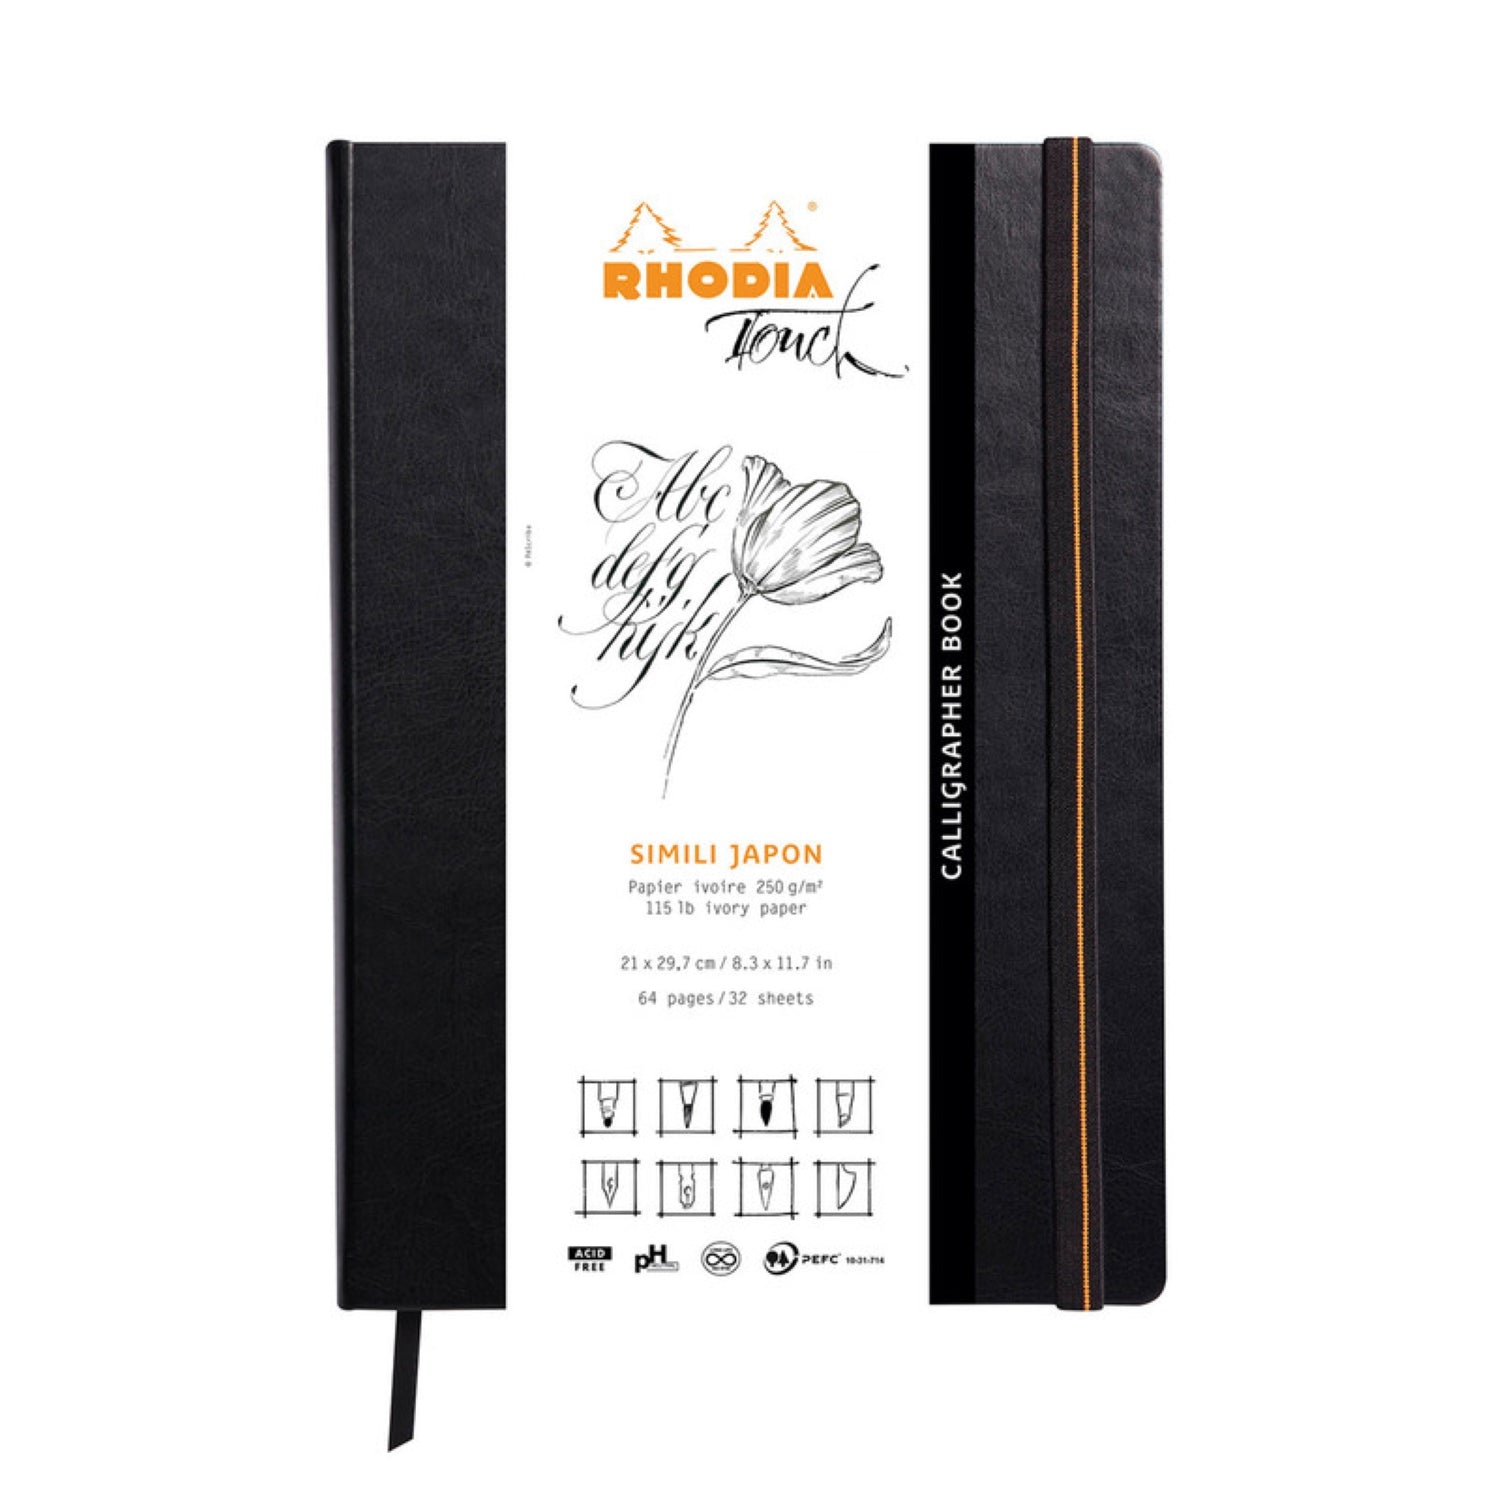 Rhodia Touch Collection Calligrapher Book A4 Portrait Plain - Black